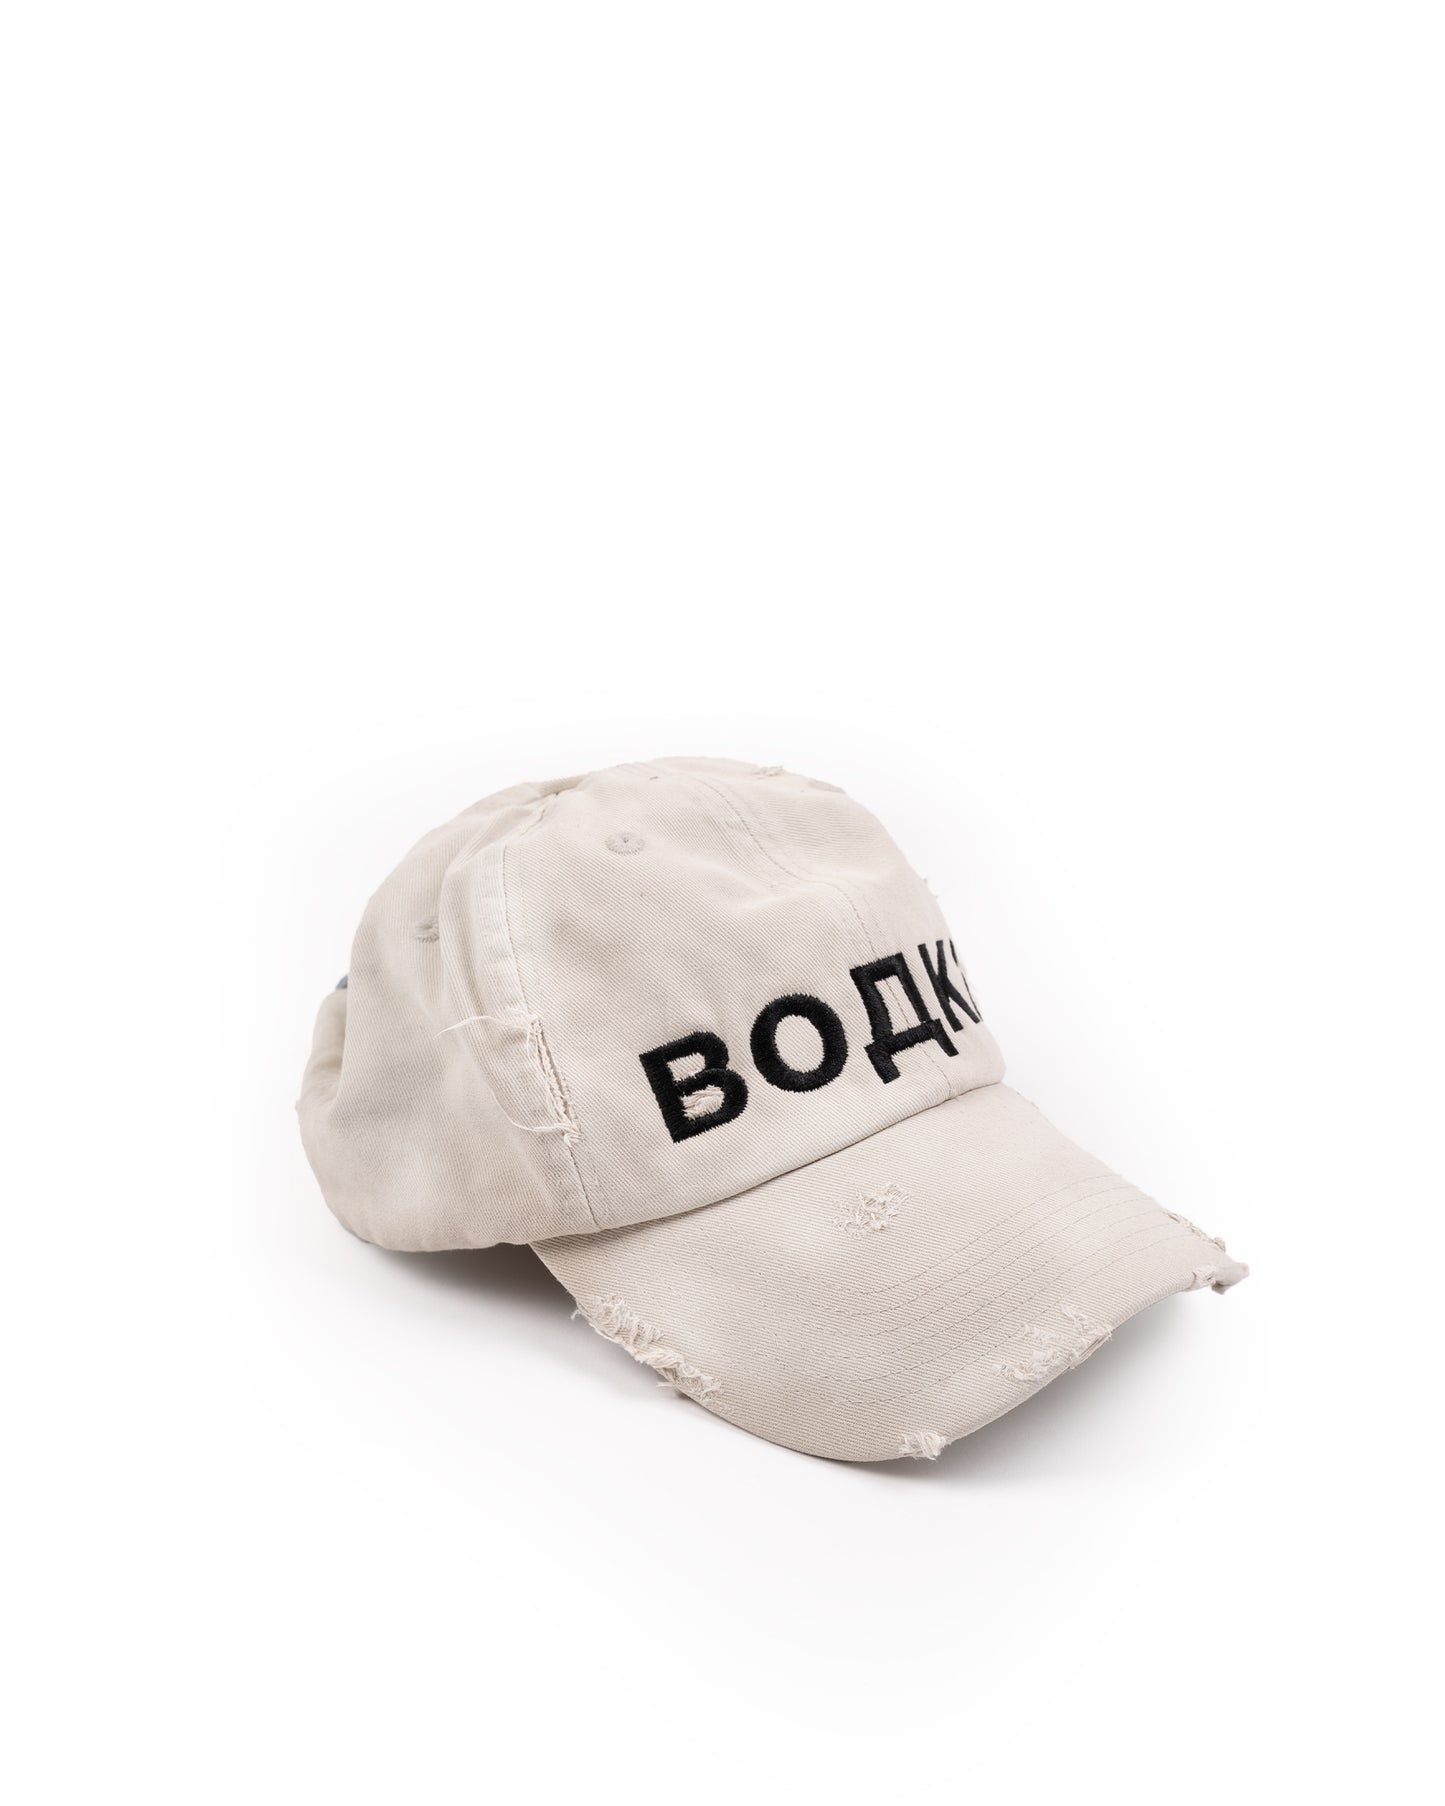 Bodka Cap: Vintage White